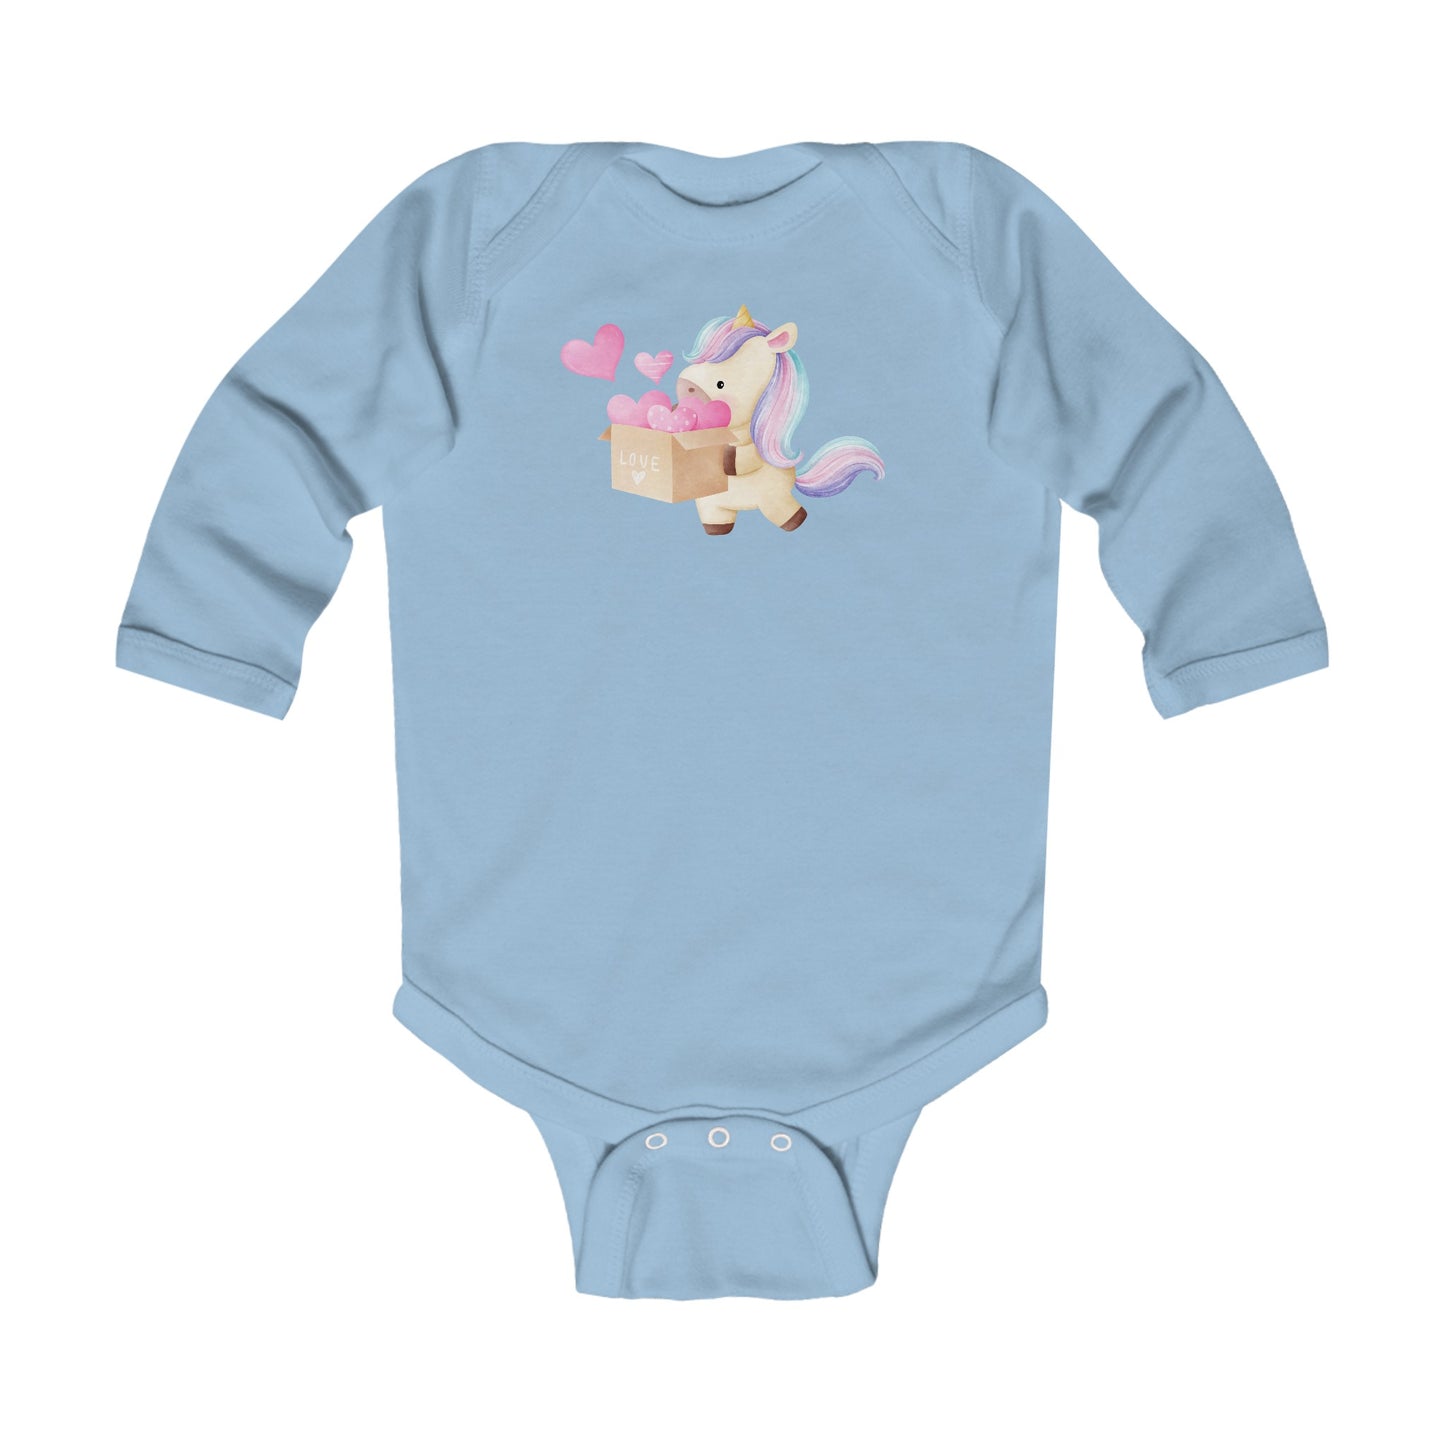 Cutest Unicorn - Box of Hearts - Infant Long Sleeve Bodysuit